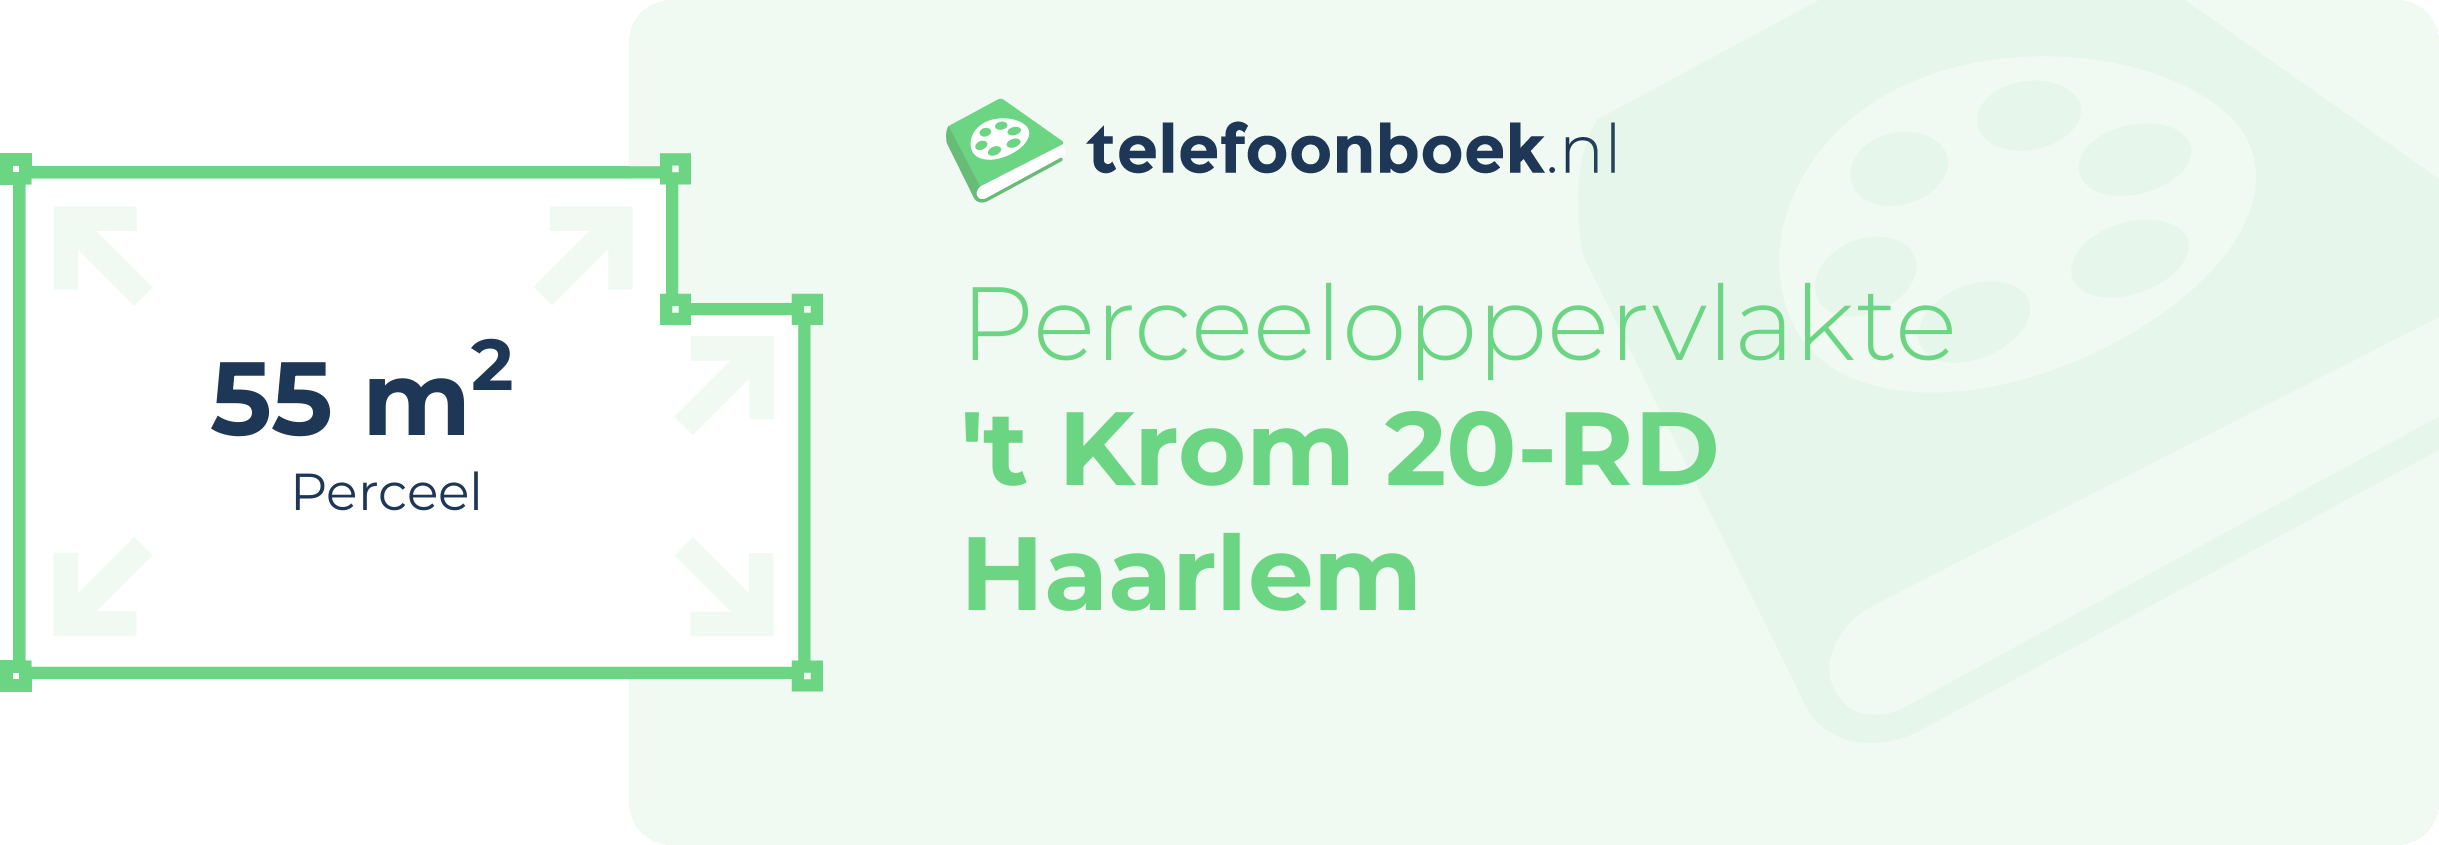 Perceeloppervlakte 't Krom 20-RD Haarlem